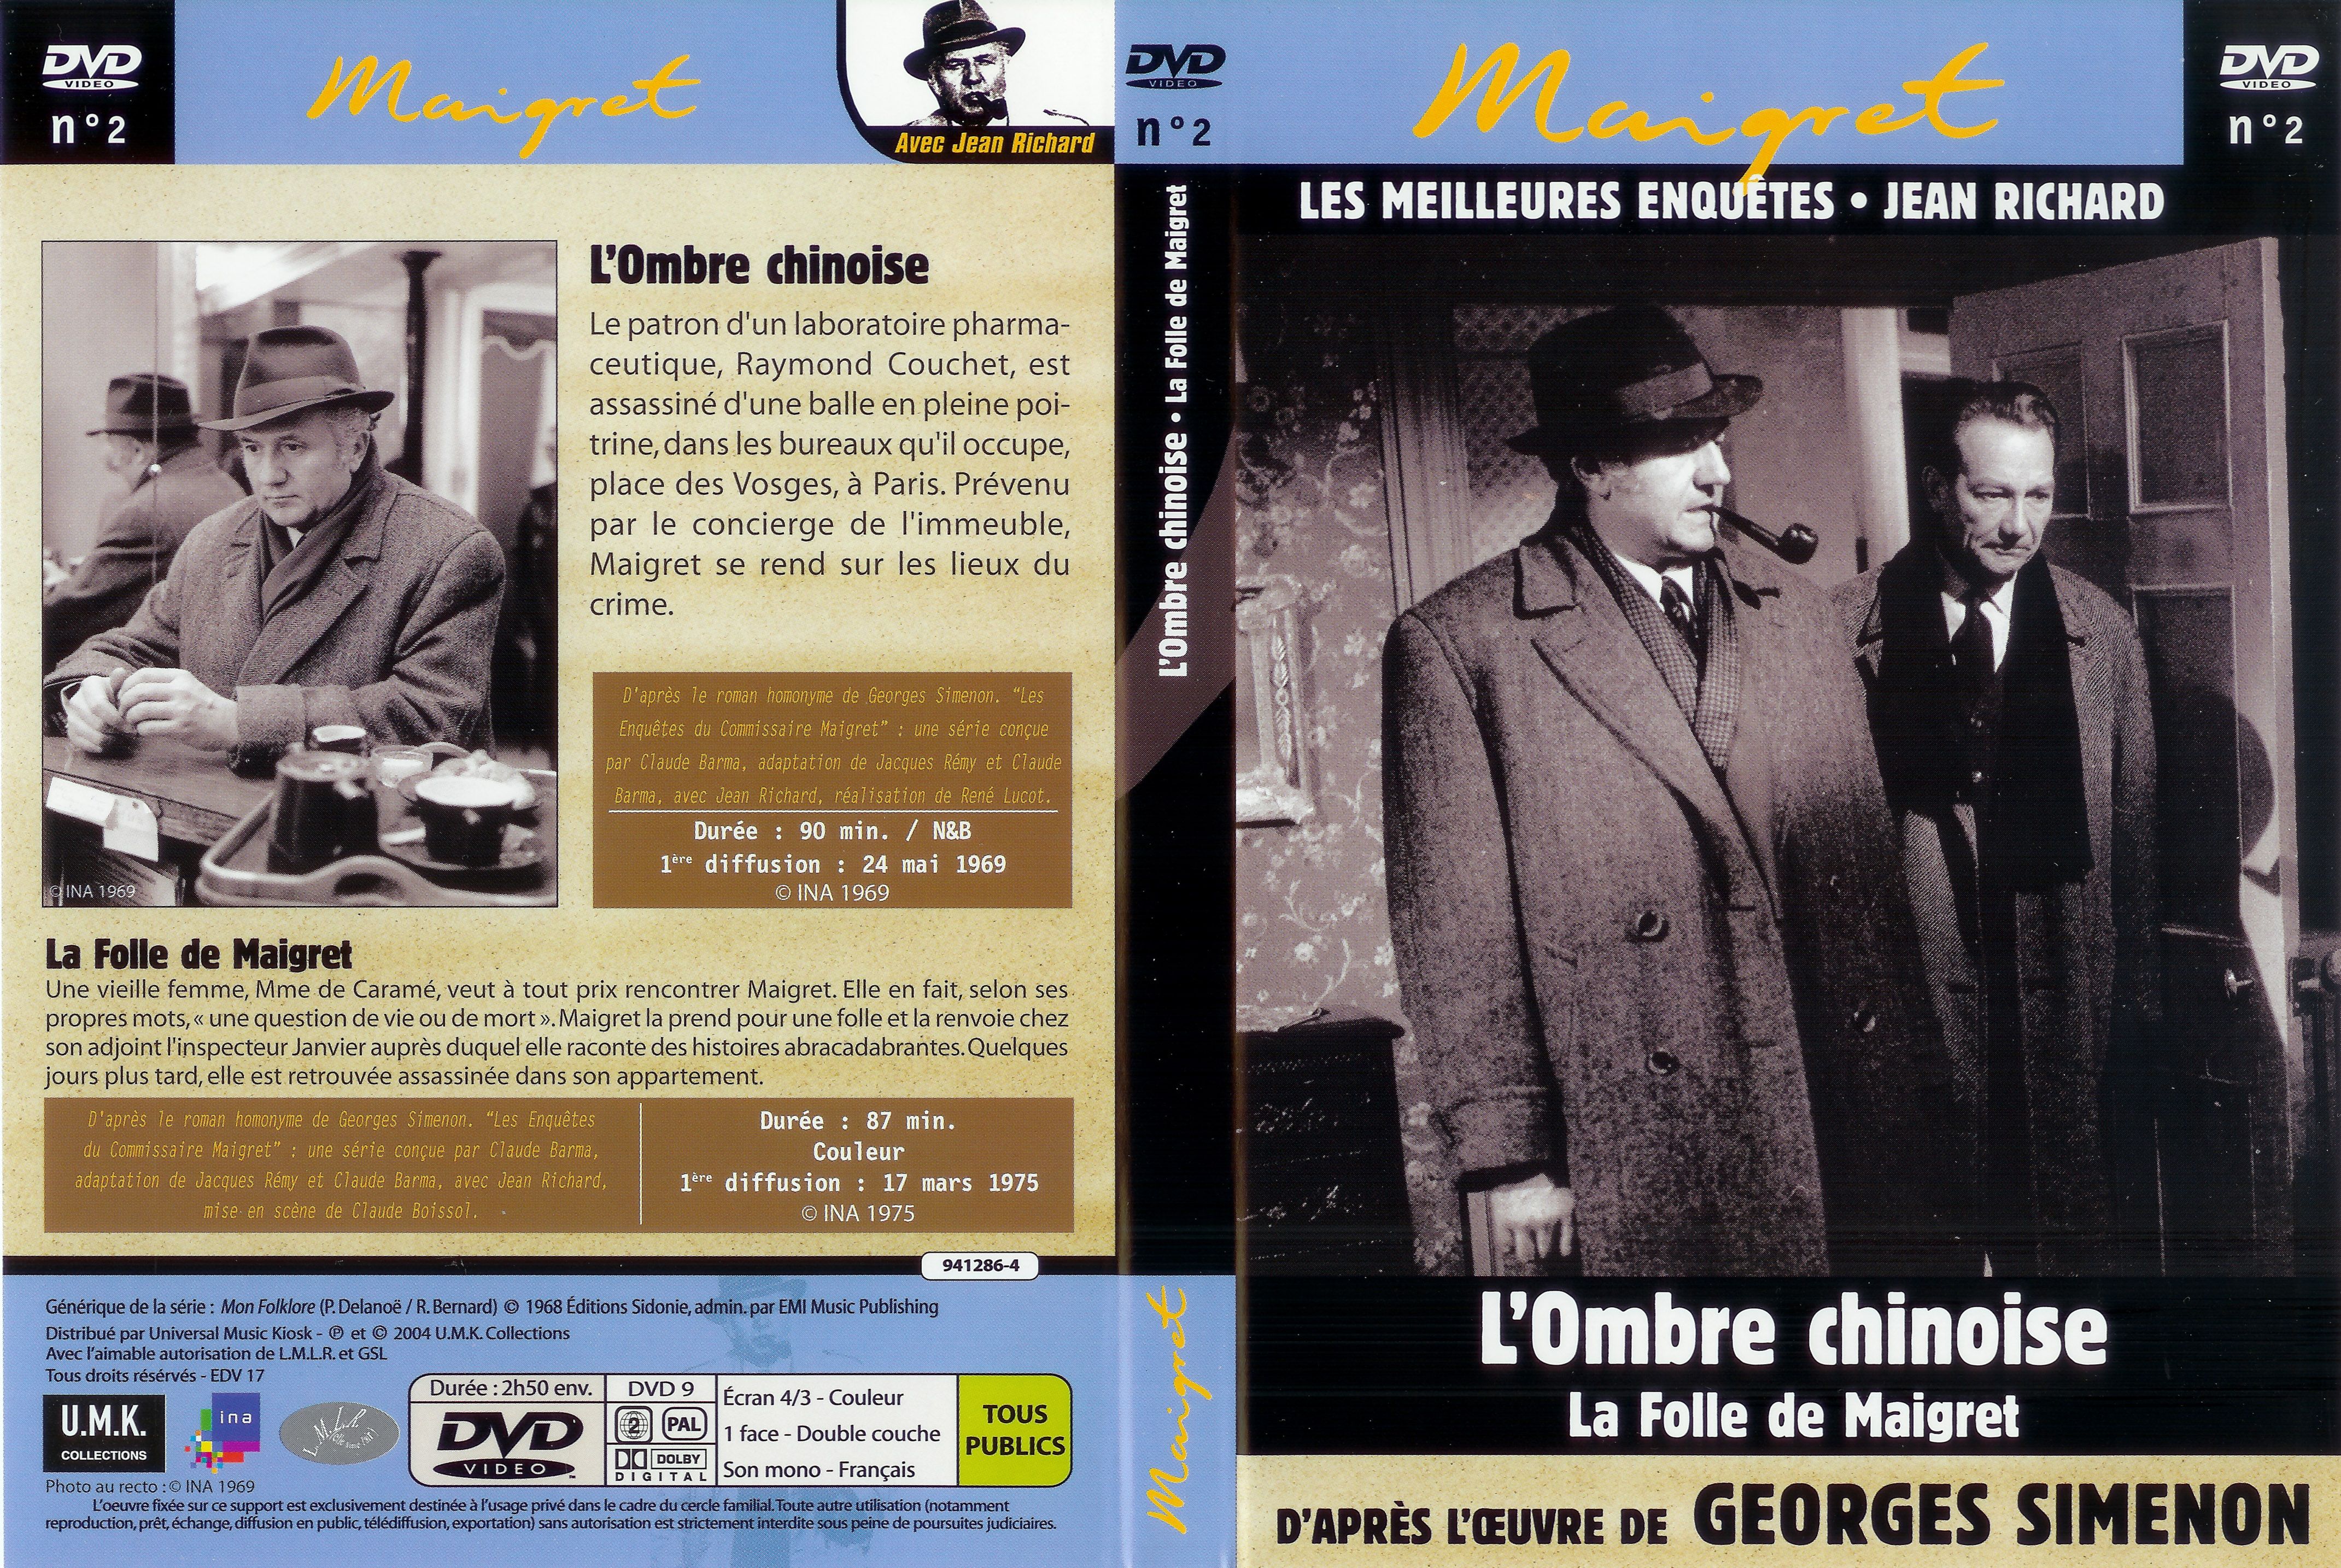 Jaquette DVD Maigret (Jean Richard) vol 02